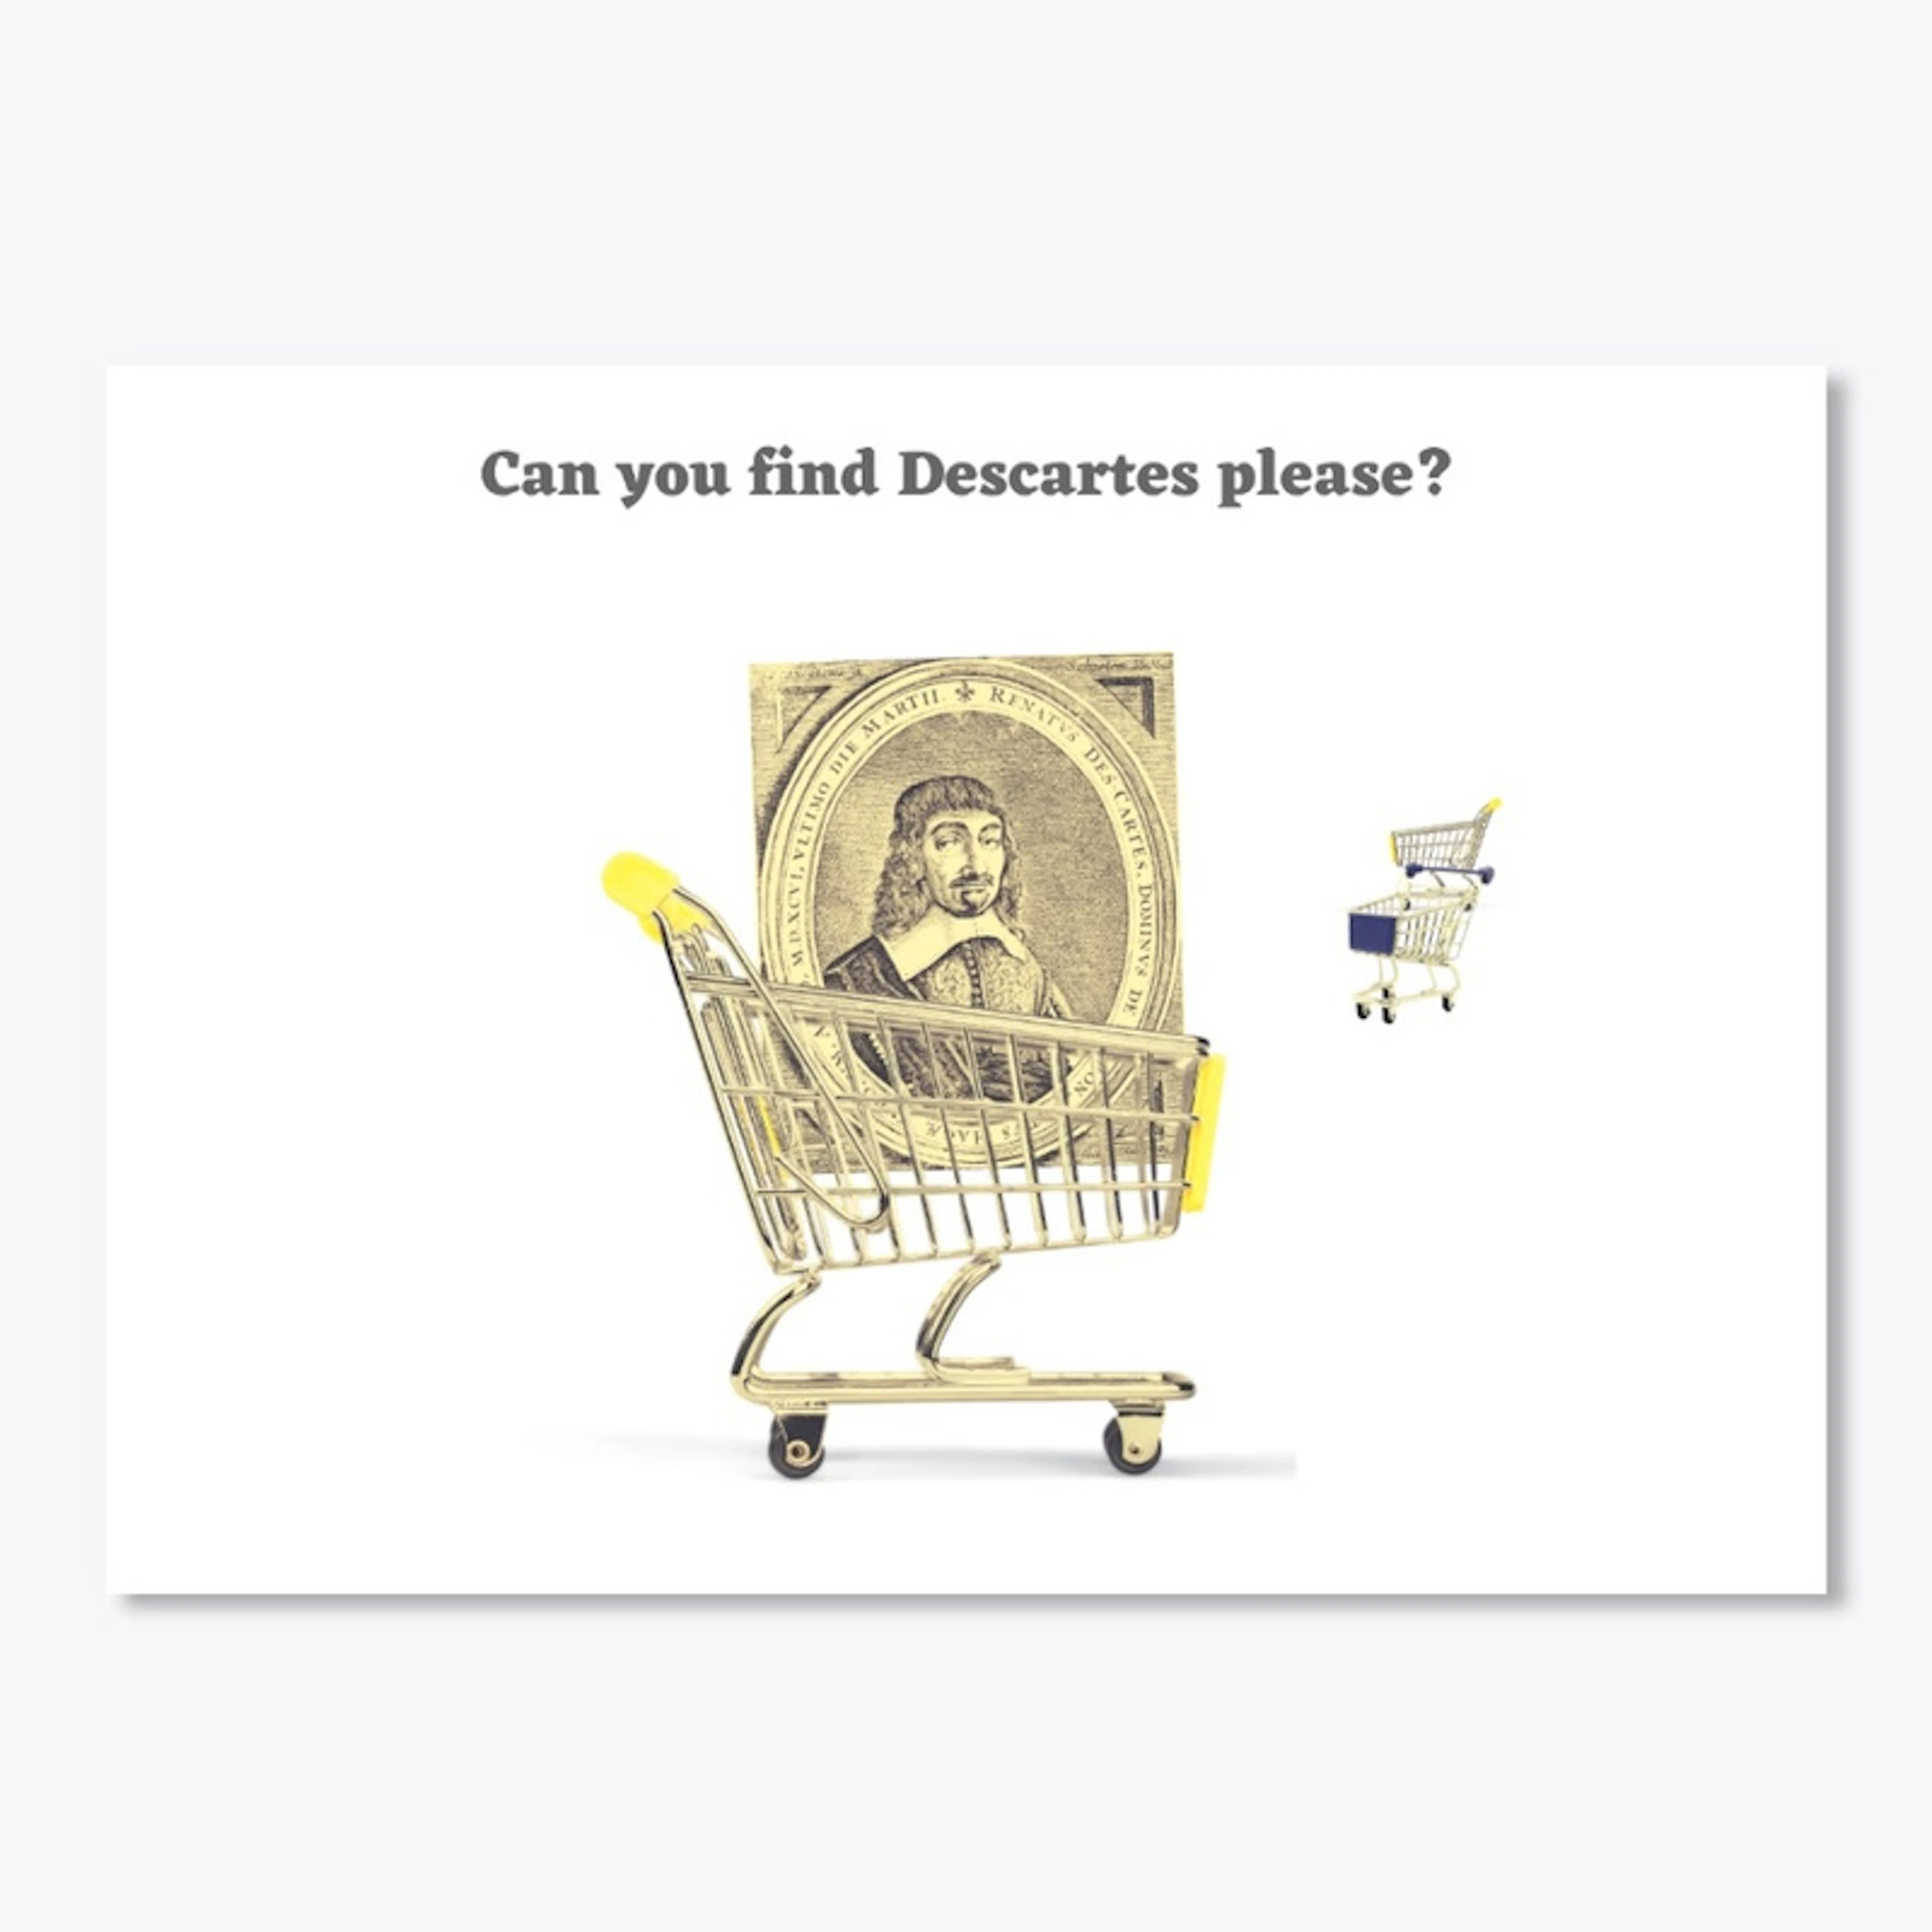 Can You Find Descartes Please?